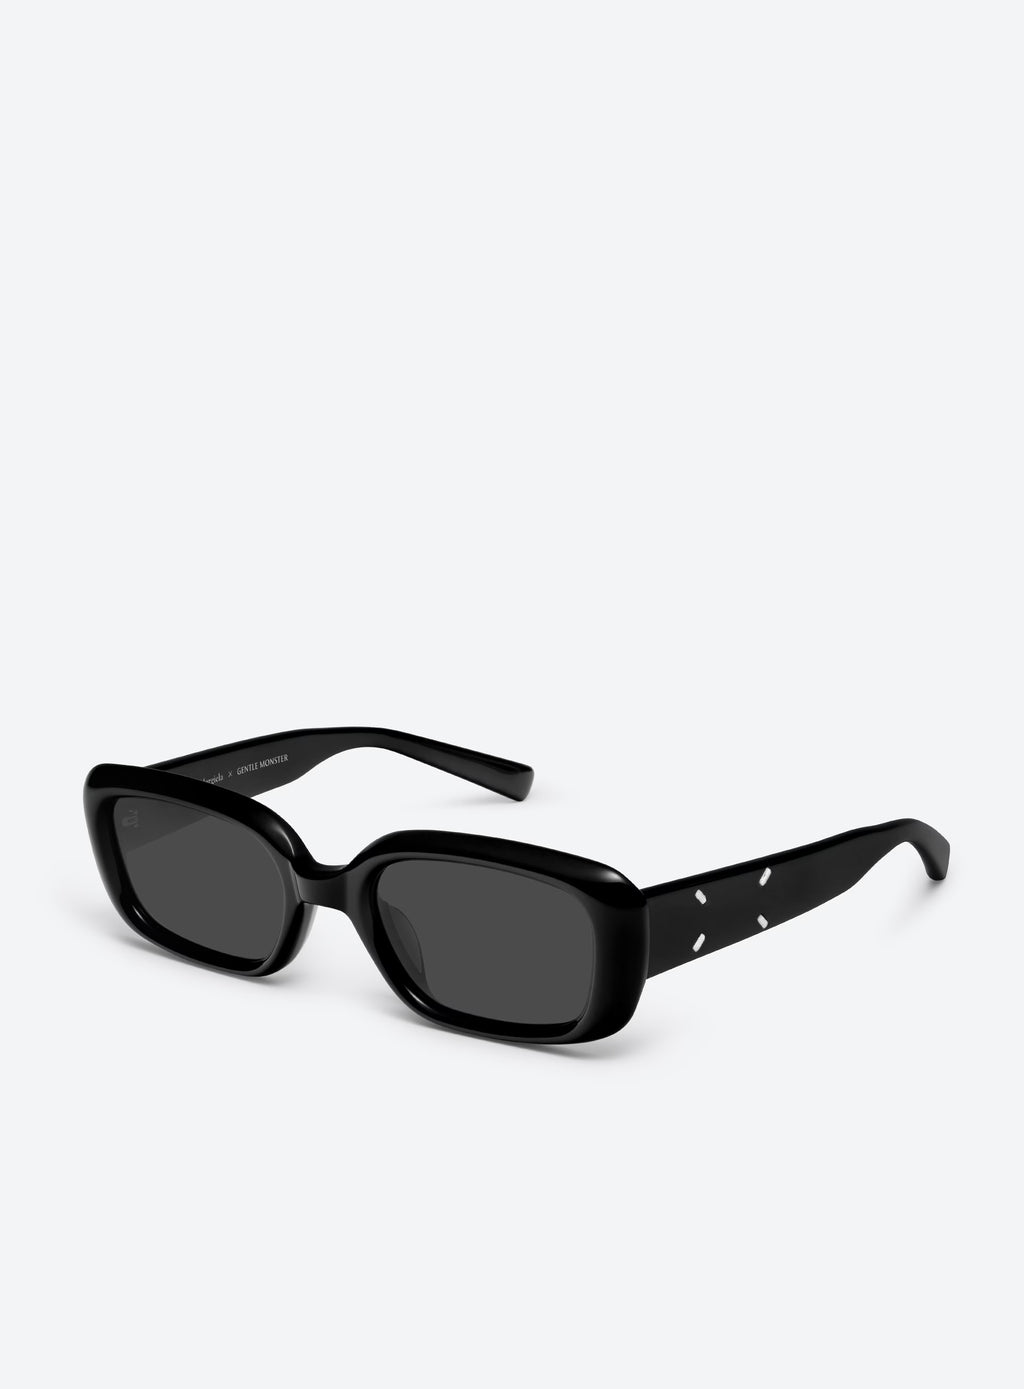 GENTLE MONSTER X MAISON MARGIELA MM106-01 Sunglasses